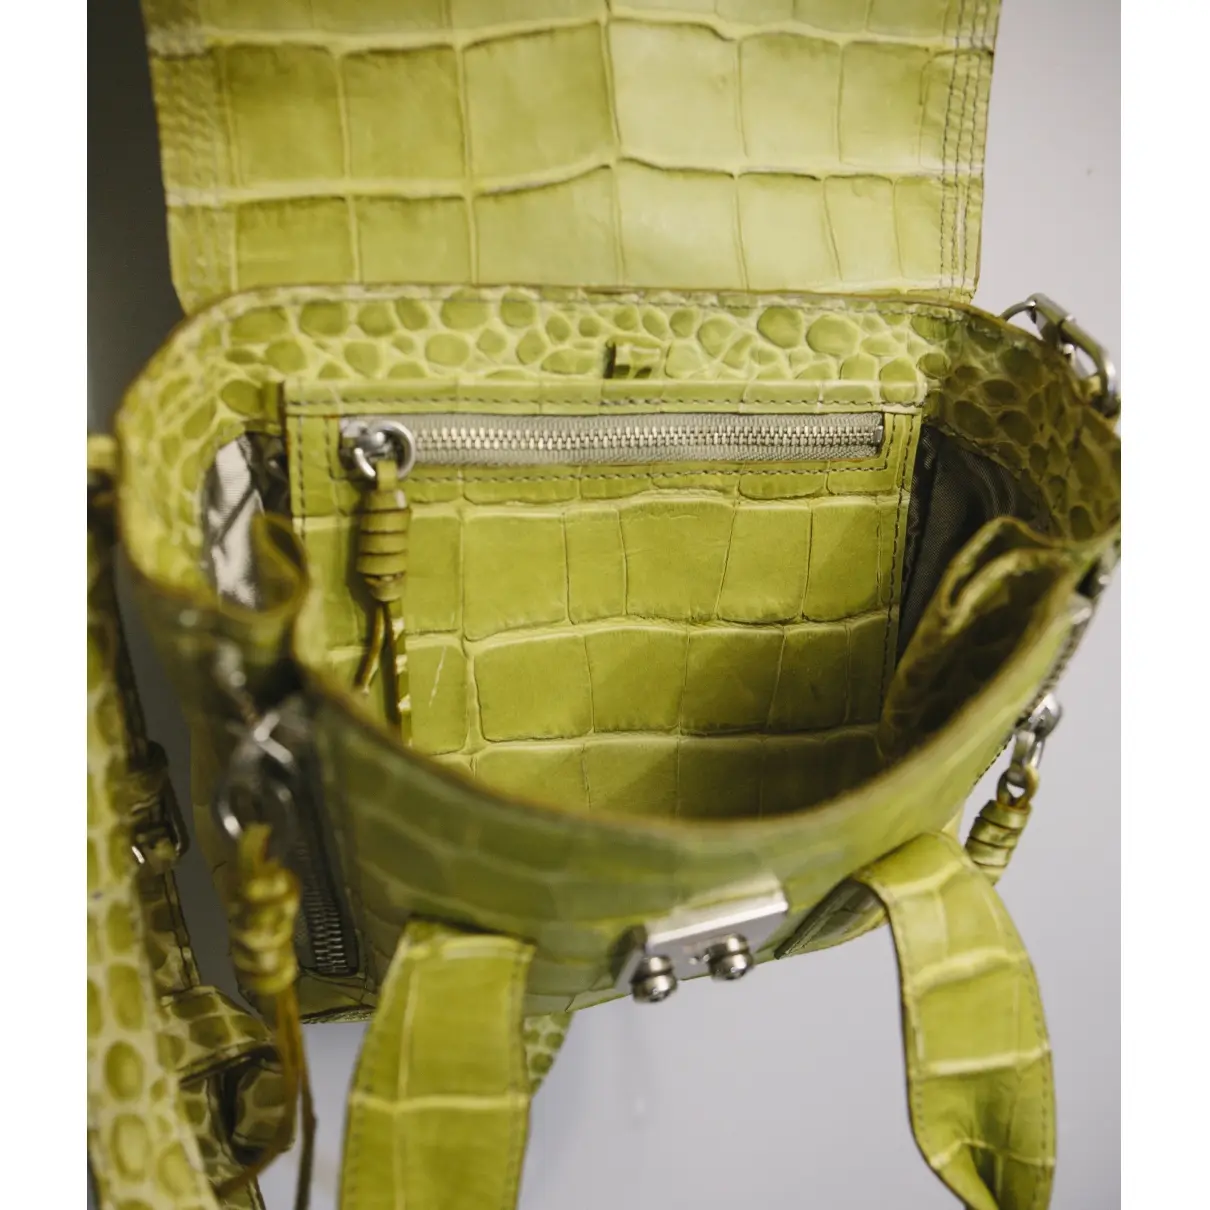 Buy 3.1 Phillip Lim Pashli leather satchel online